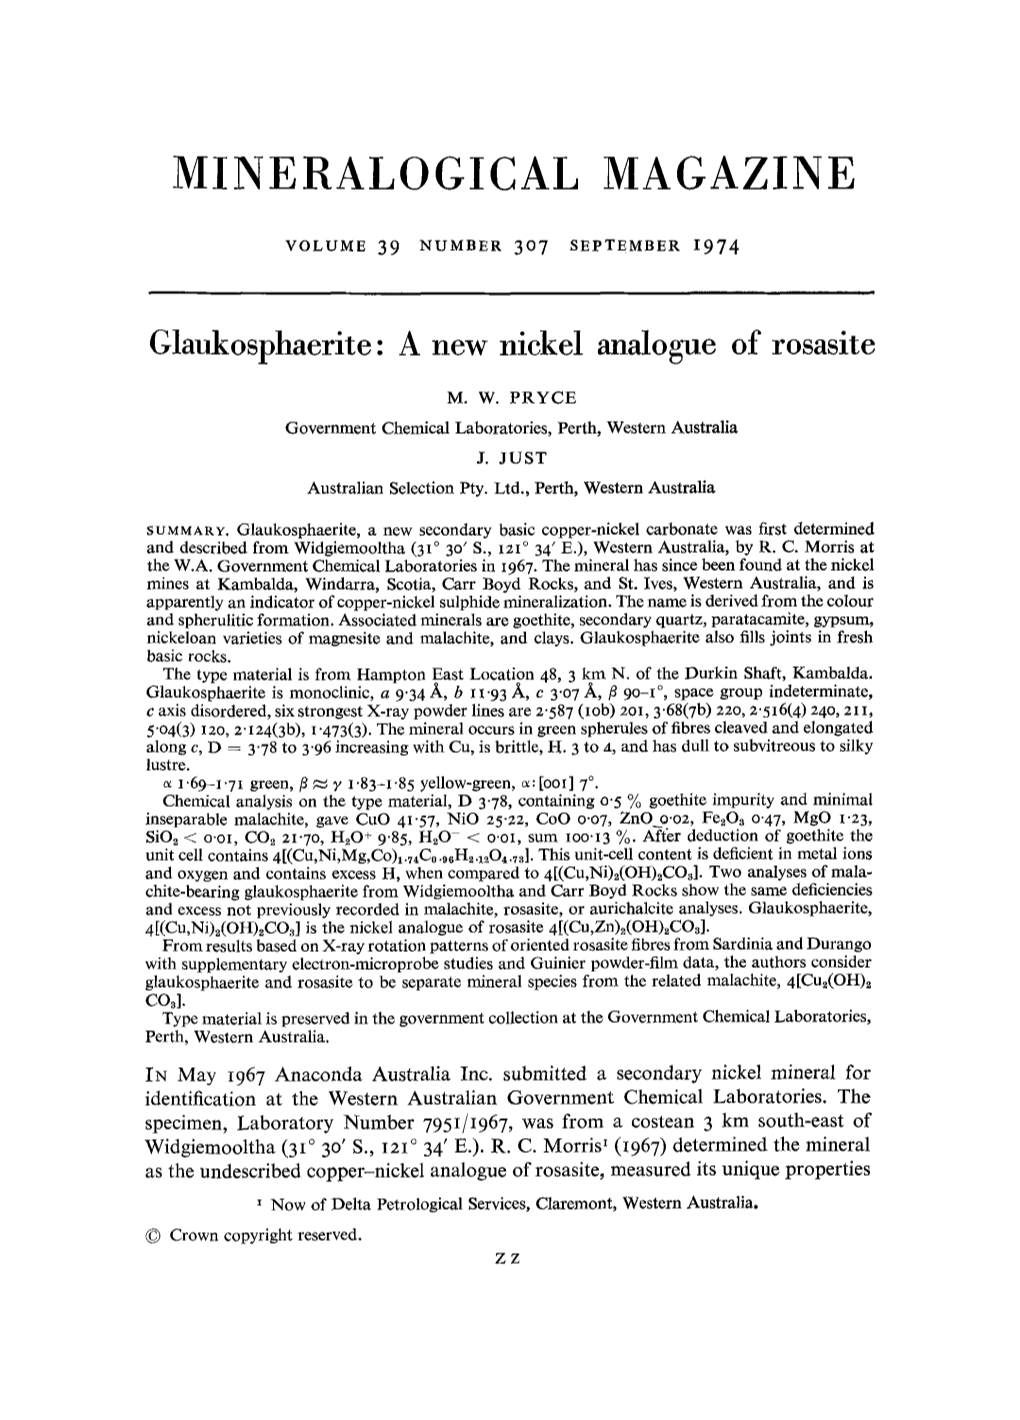 Glaukosphaerite: a New Nickel Analogue of Rosasite